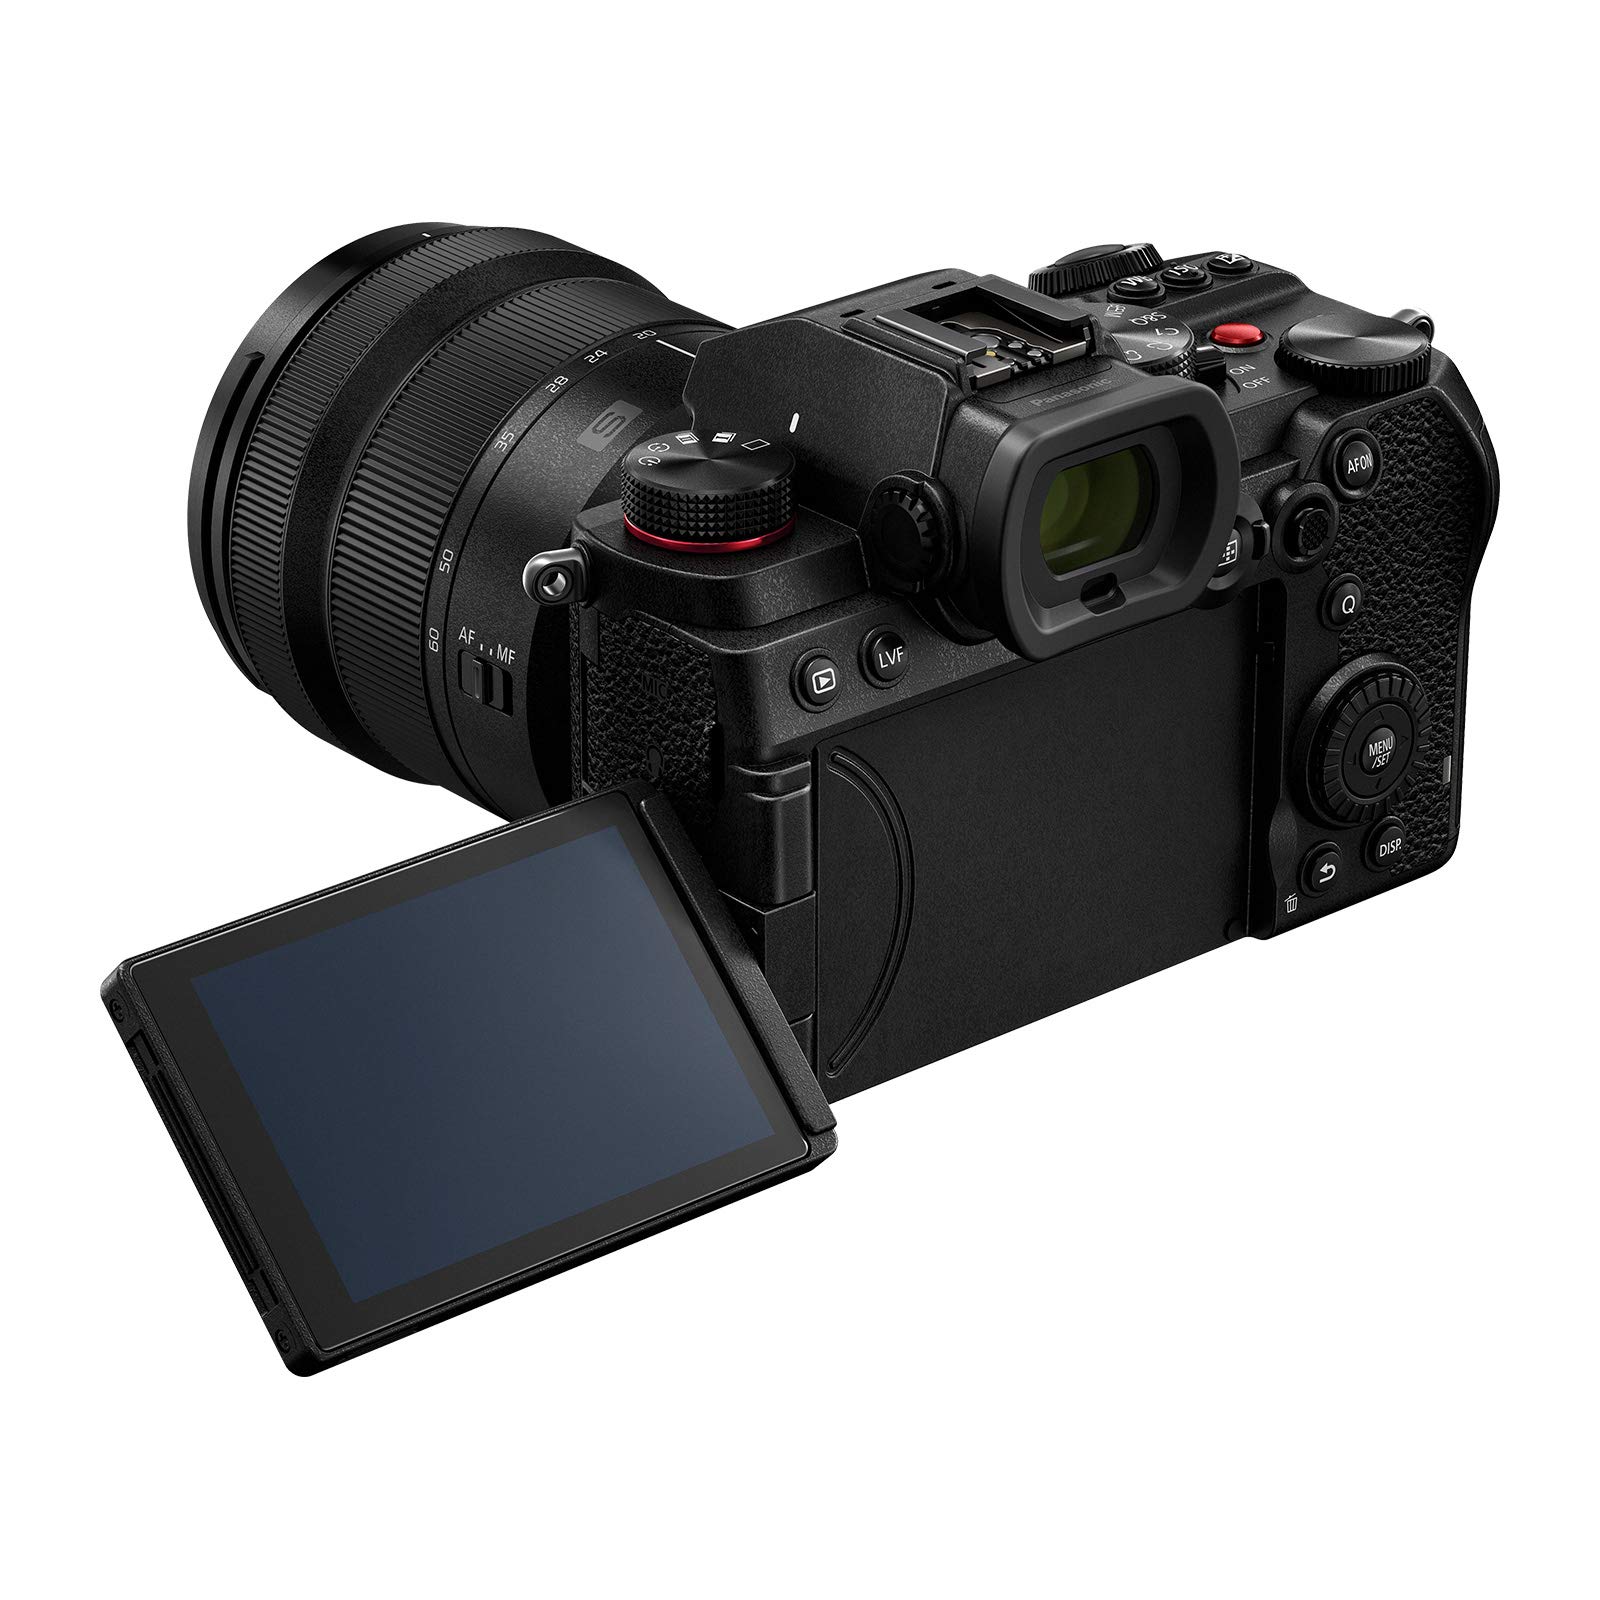 Panasonic LUMIX S5 Full Frame Mirrorless Camera, 4K 60P Video Recording with Flip Screen & WiFi, L-Mount, 5-Axis Dual I.S., DC-S5BODY (Black)